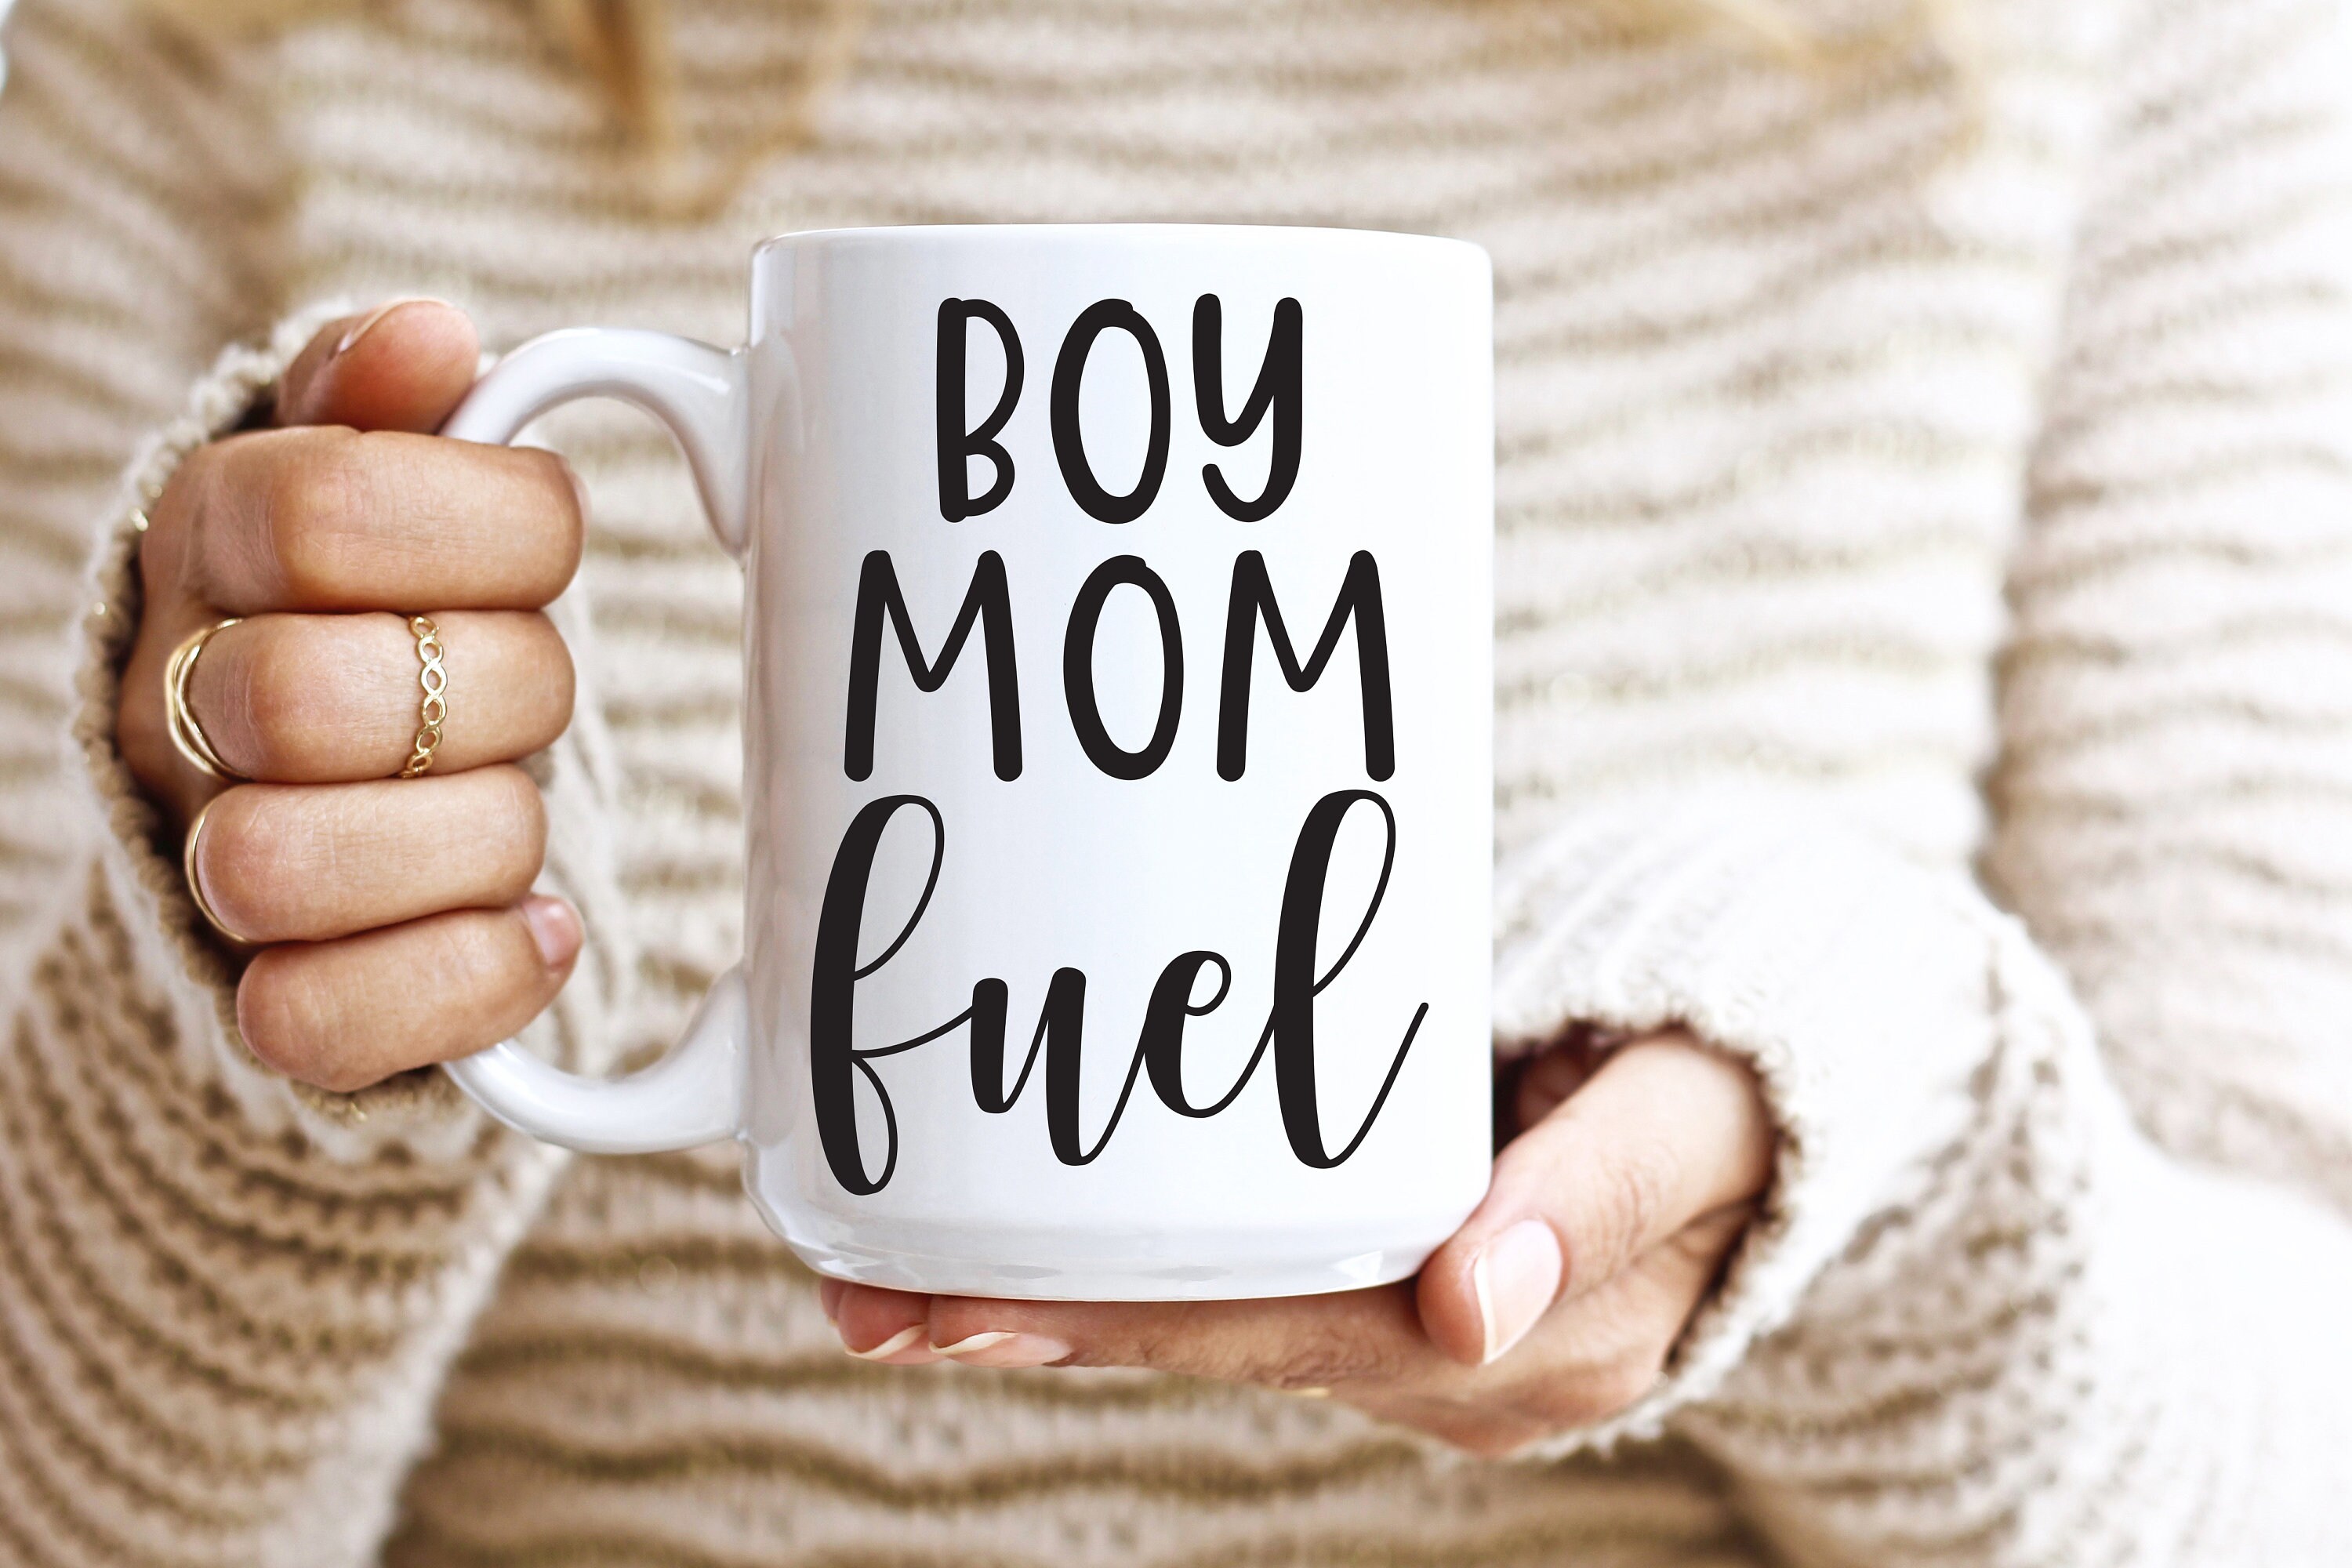 Fuel Up with this Boy Mom Mug